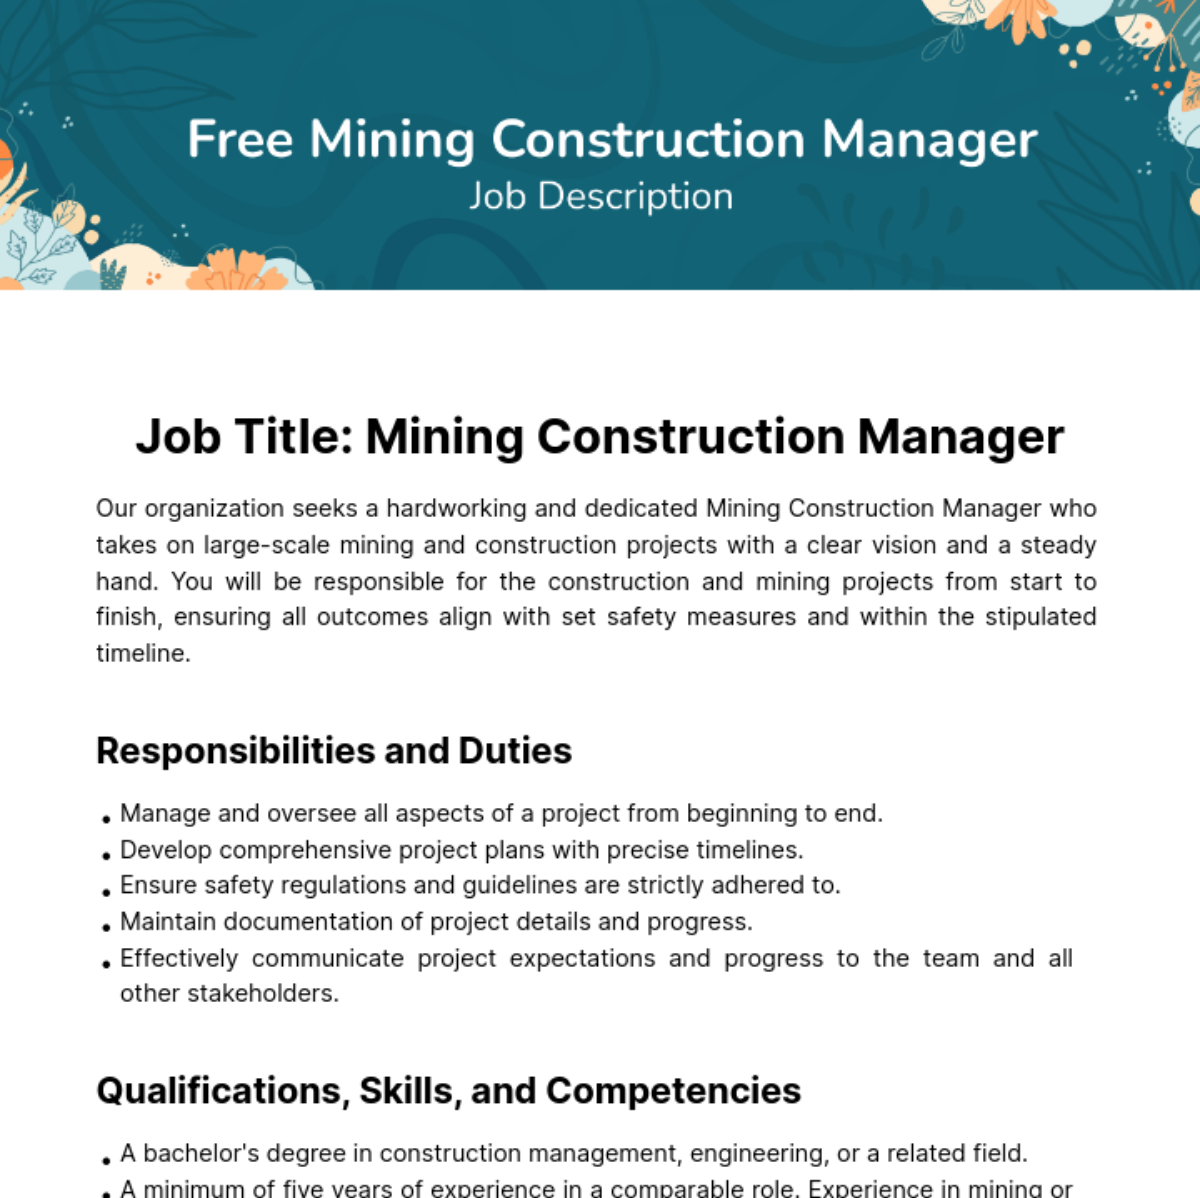 Free Mining Construction Manager Job Description Template